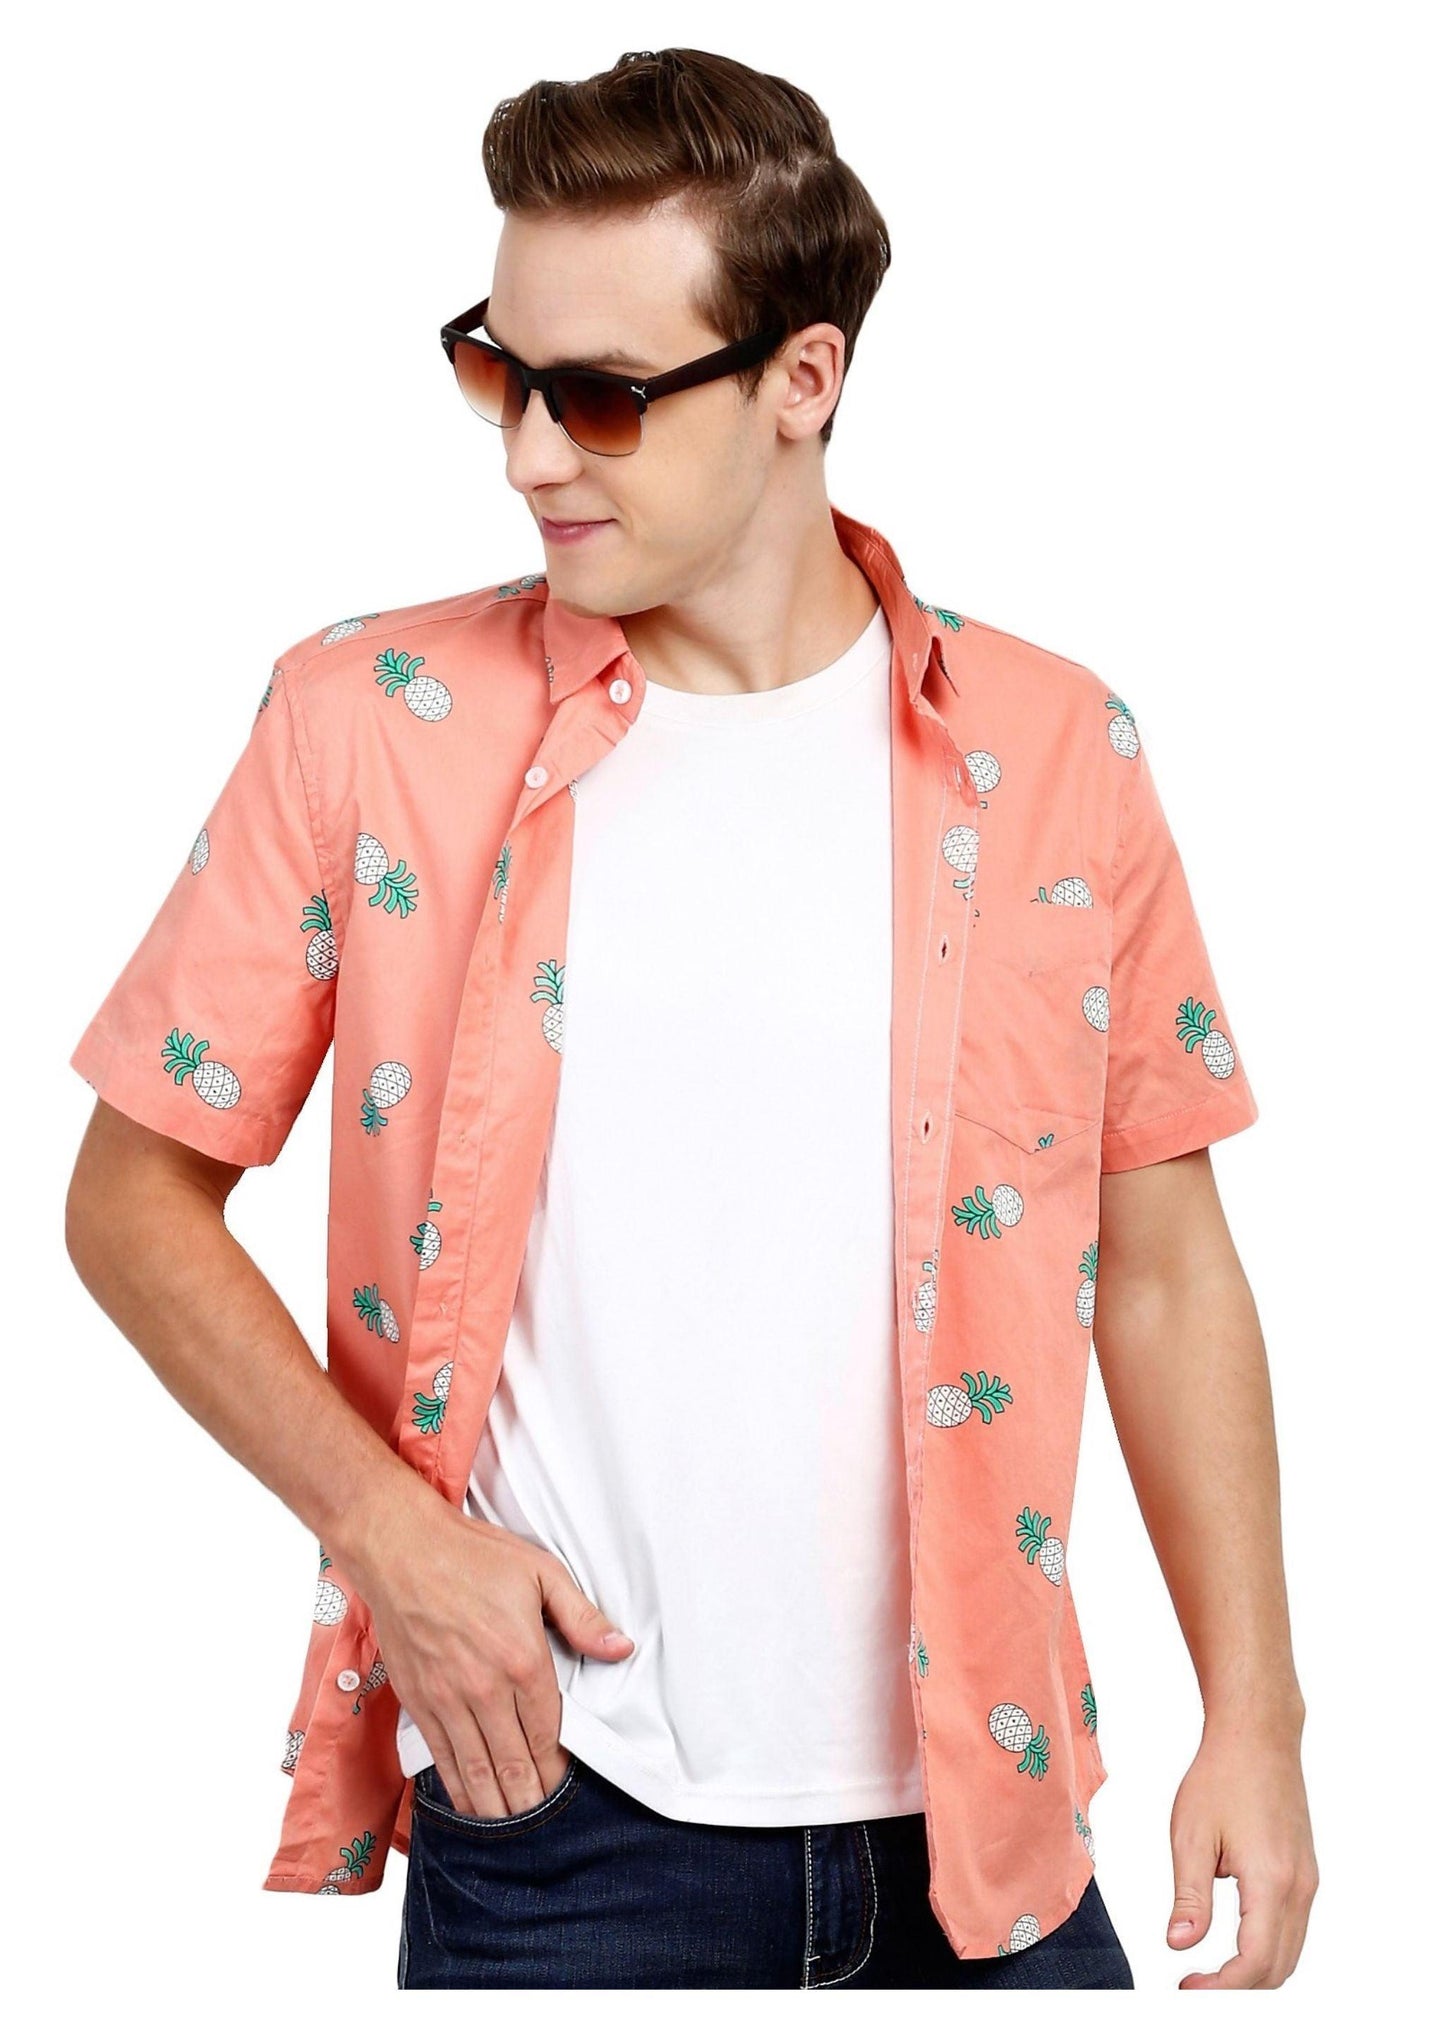 Tusok-pink-pineappleFeatured Shirt, Vacation-Printed Shirtimage-Peach Pineapple (7)